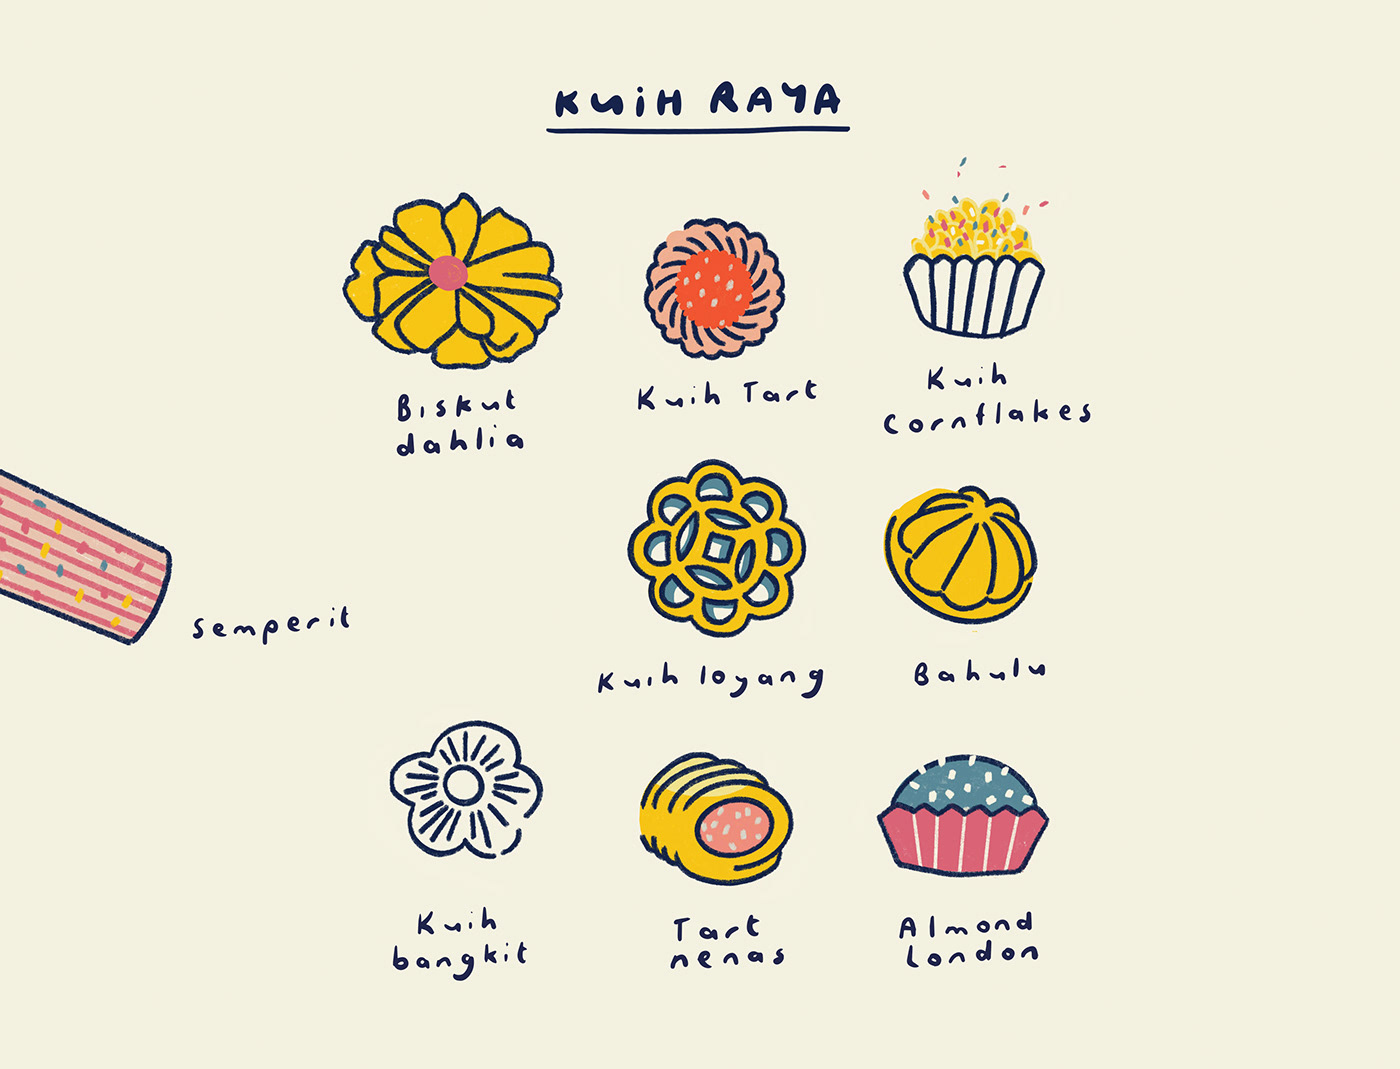 AIDILFITRI asia Eid Kuih Raya malaysia money packet Mubarak projek sembangsembang raya Quirky Illustration